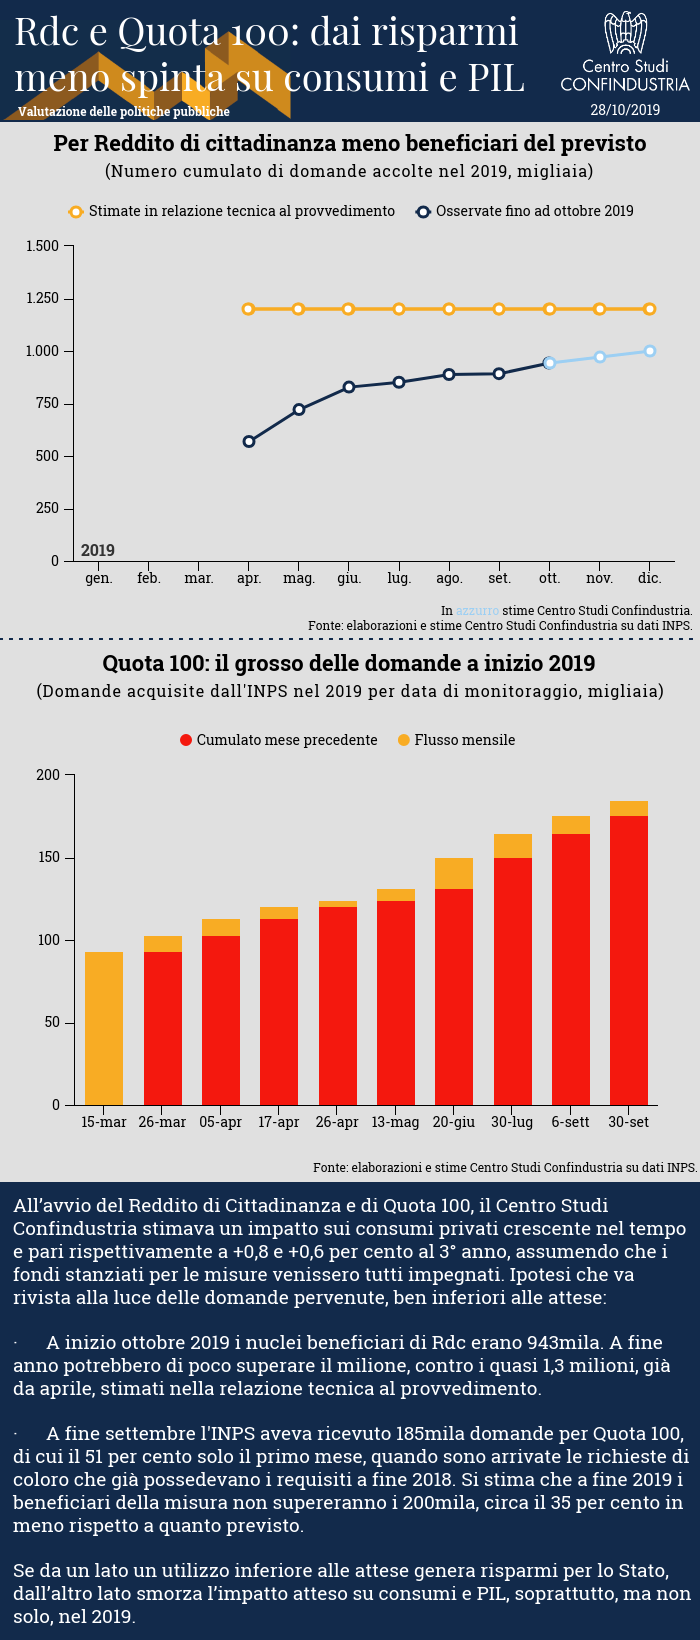 Infografica CSC - Rdc e Quota 100: dai risparmi meno spinta su consumi e PIL